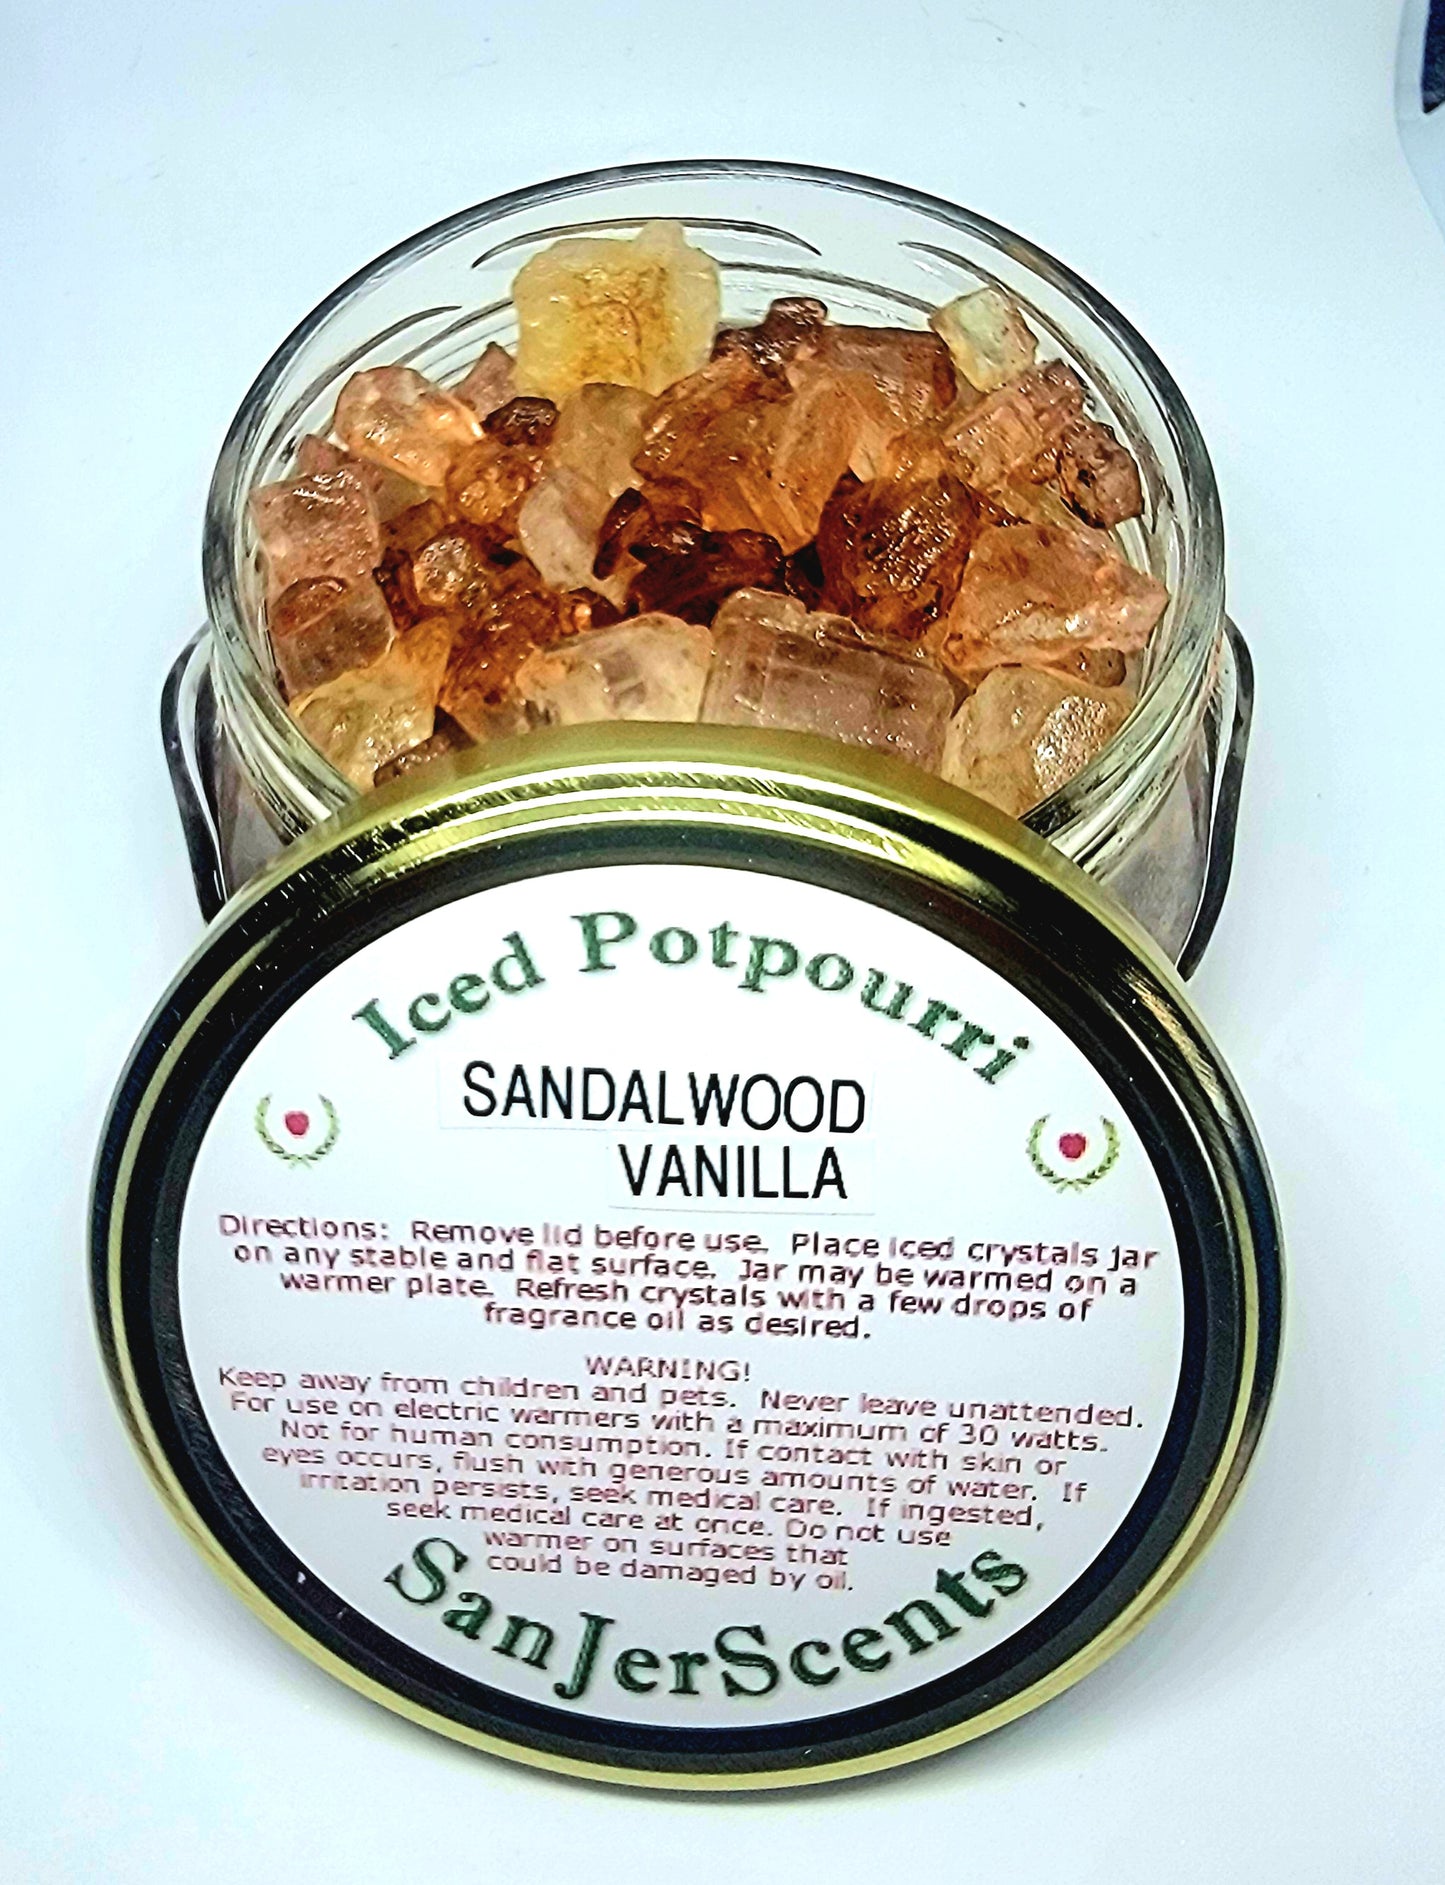 Brown, amber, tan large rock salt cystal potpourri in Sandalwood Vanilla fragrance.  In clear glass tureen jar with gold lid. 